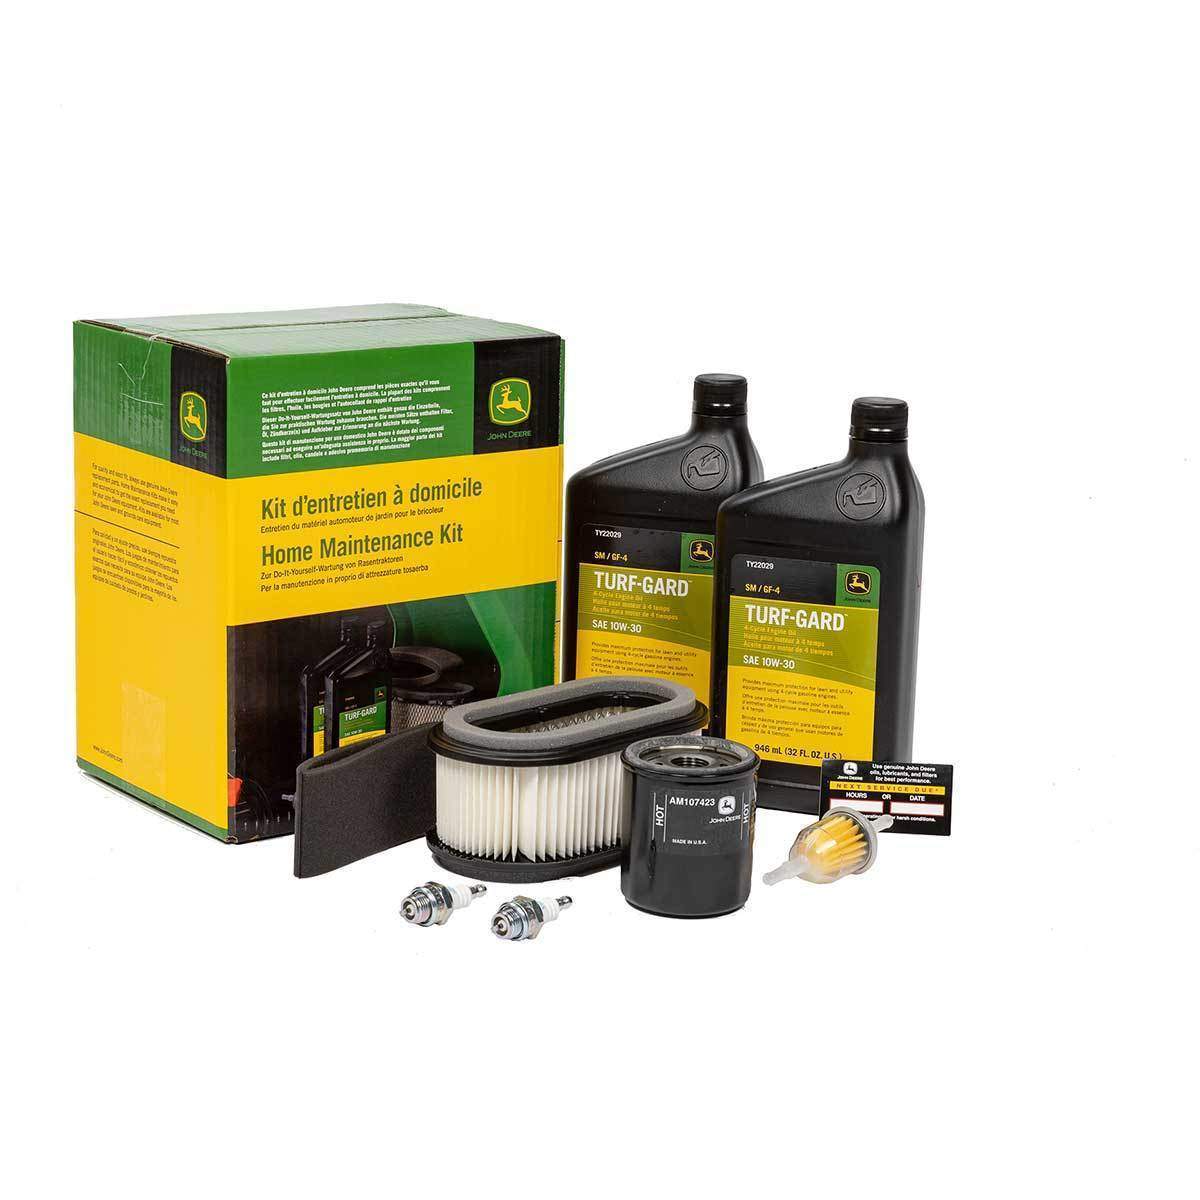 John Deere Home Maintenance Kit LG184 - Green Farm Parts